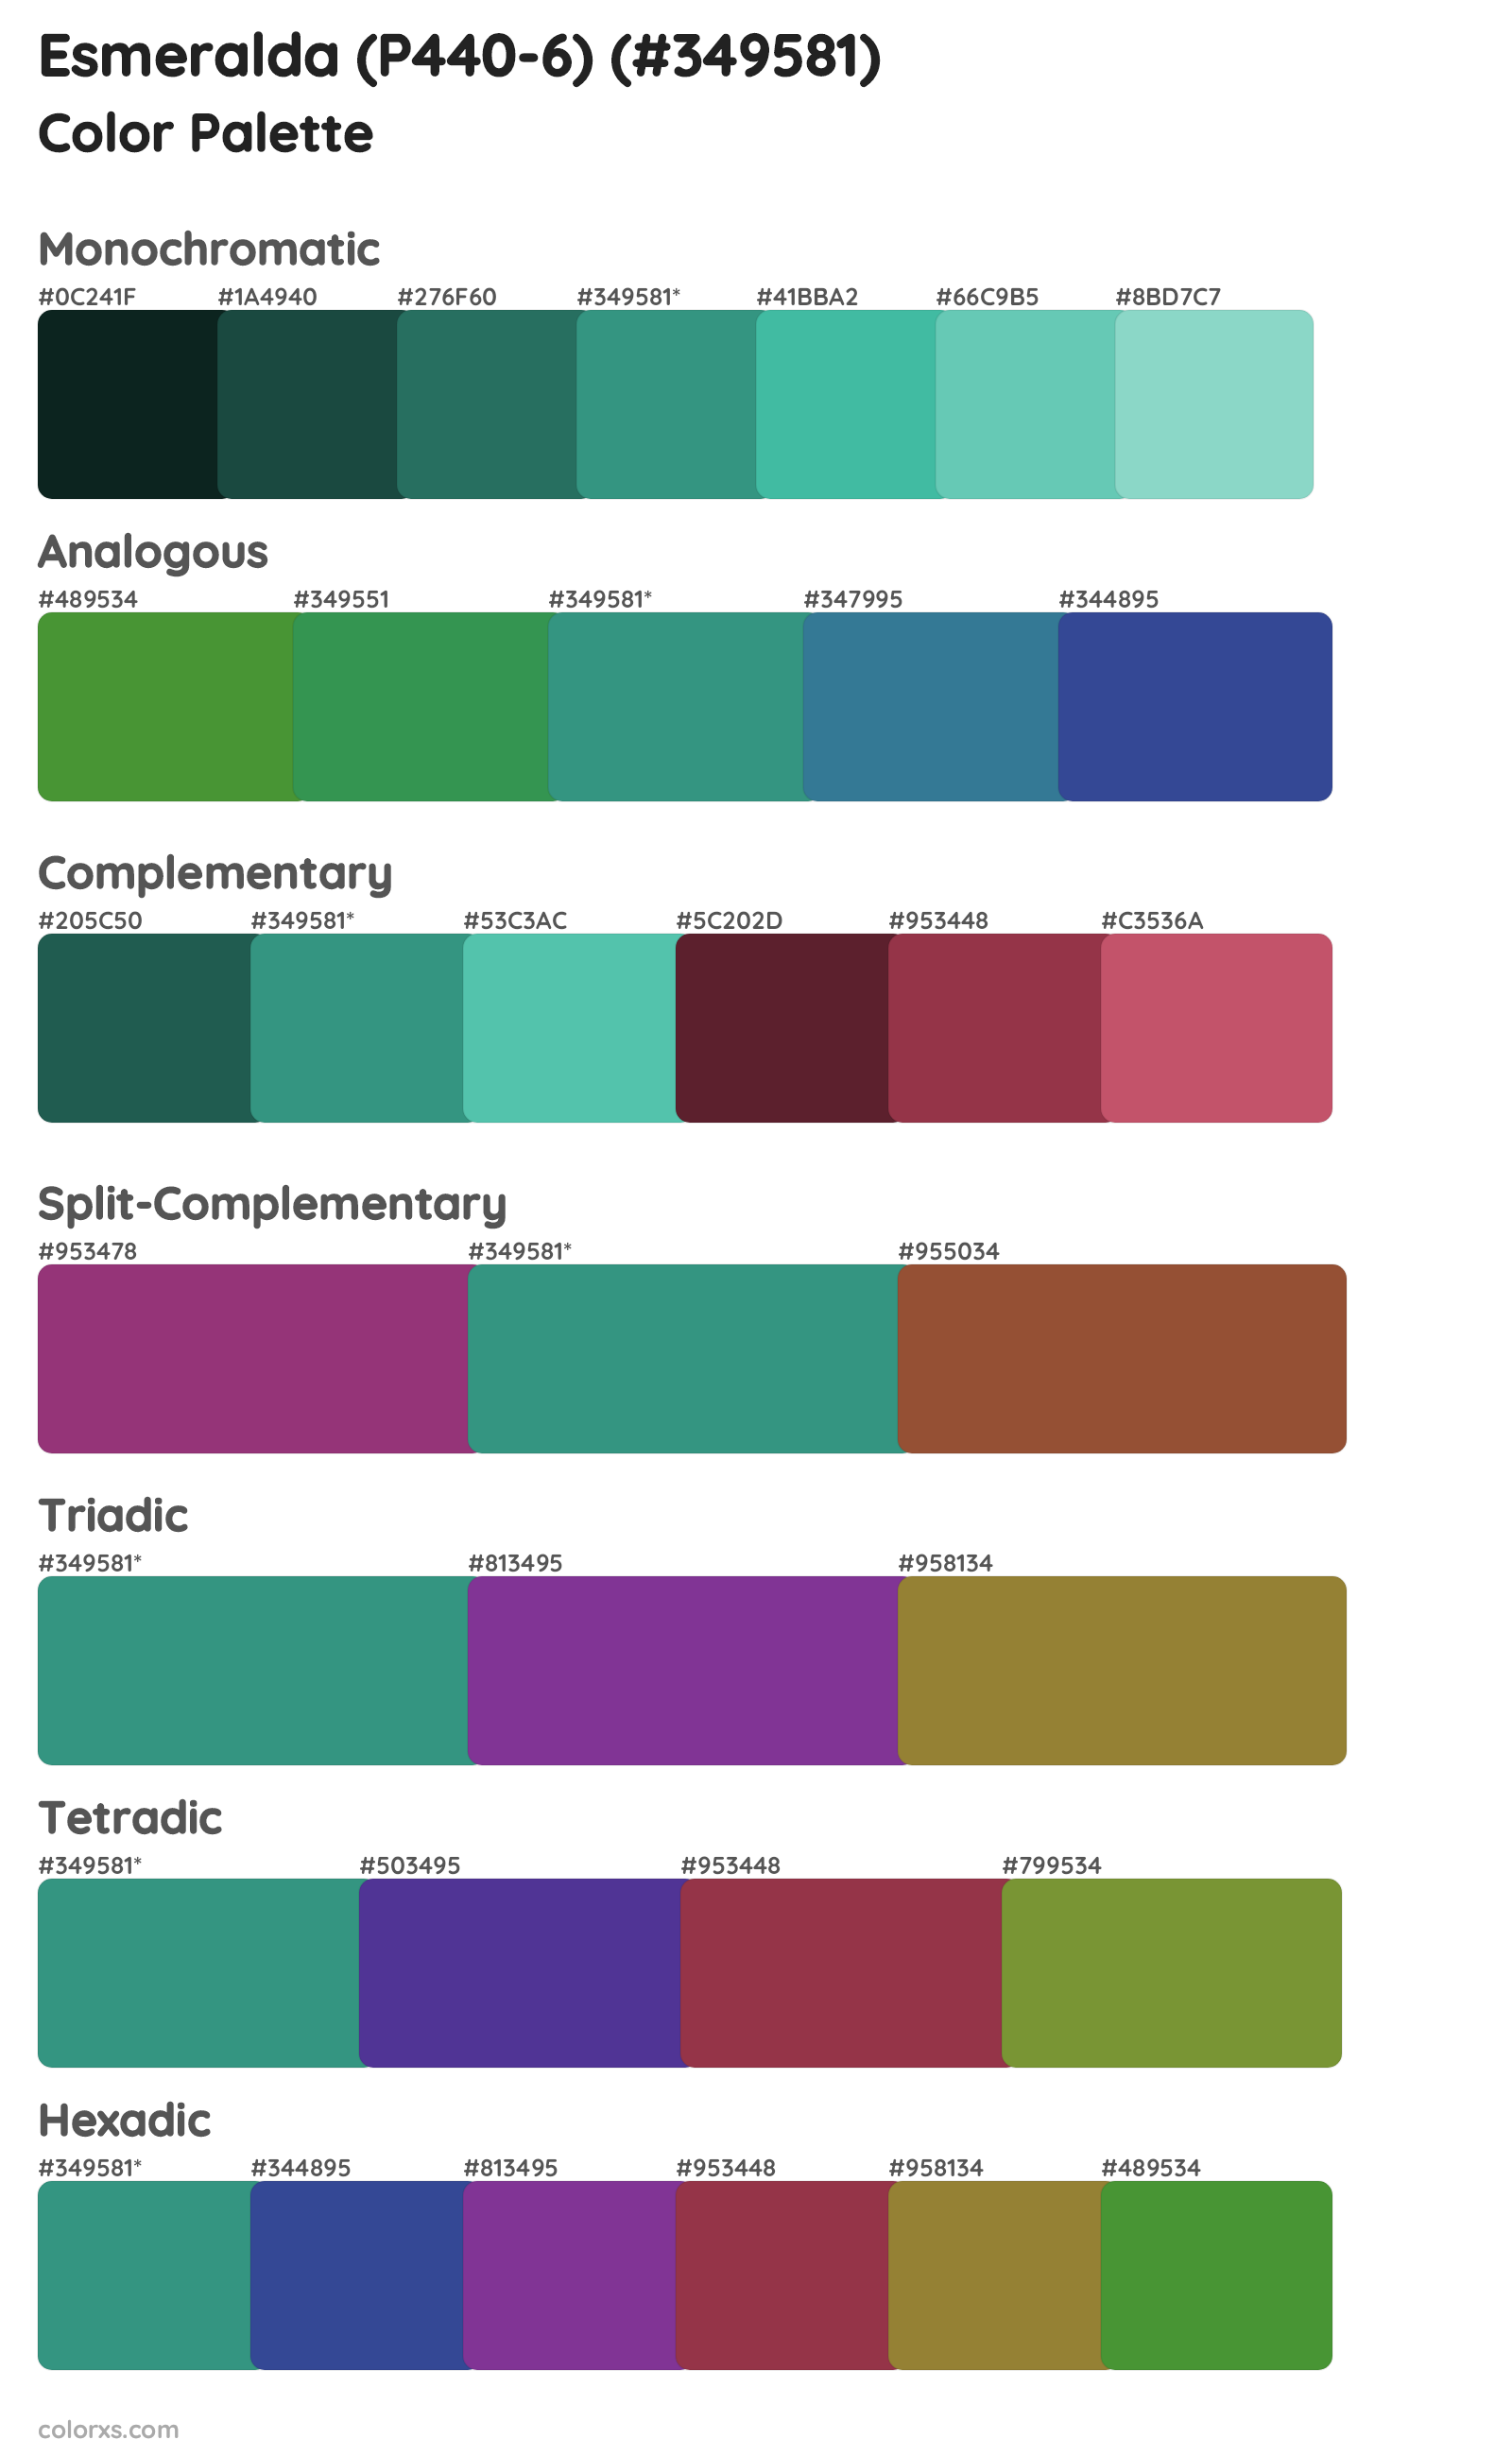 Esmeralda (P440-6) Color Scheme Palettes